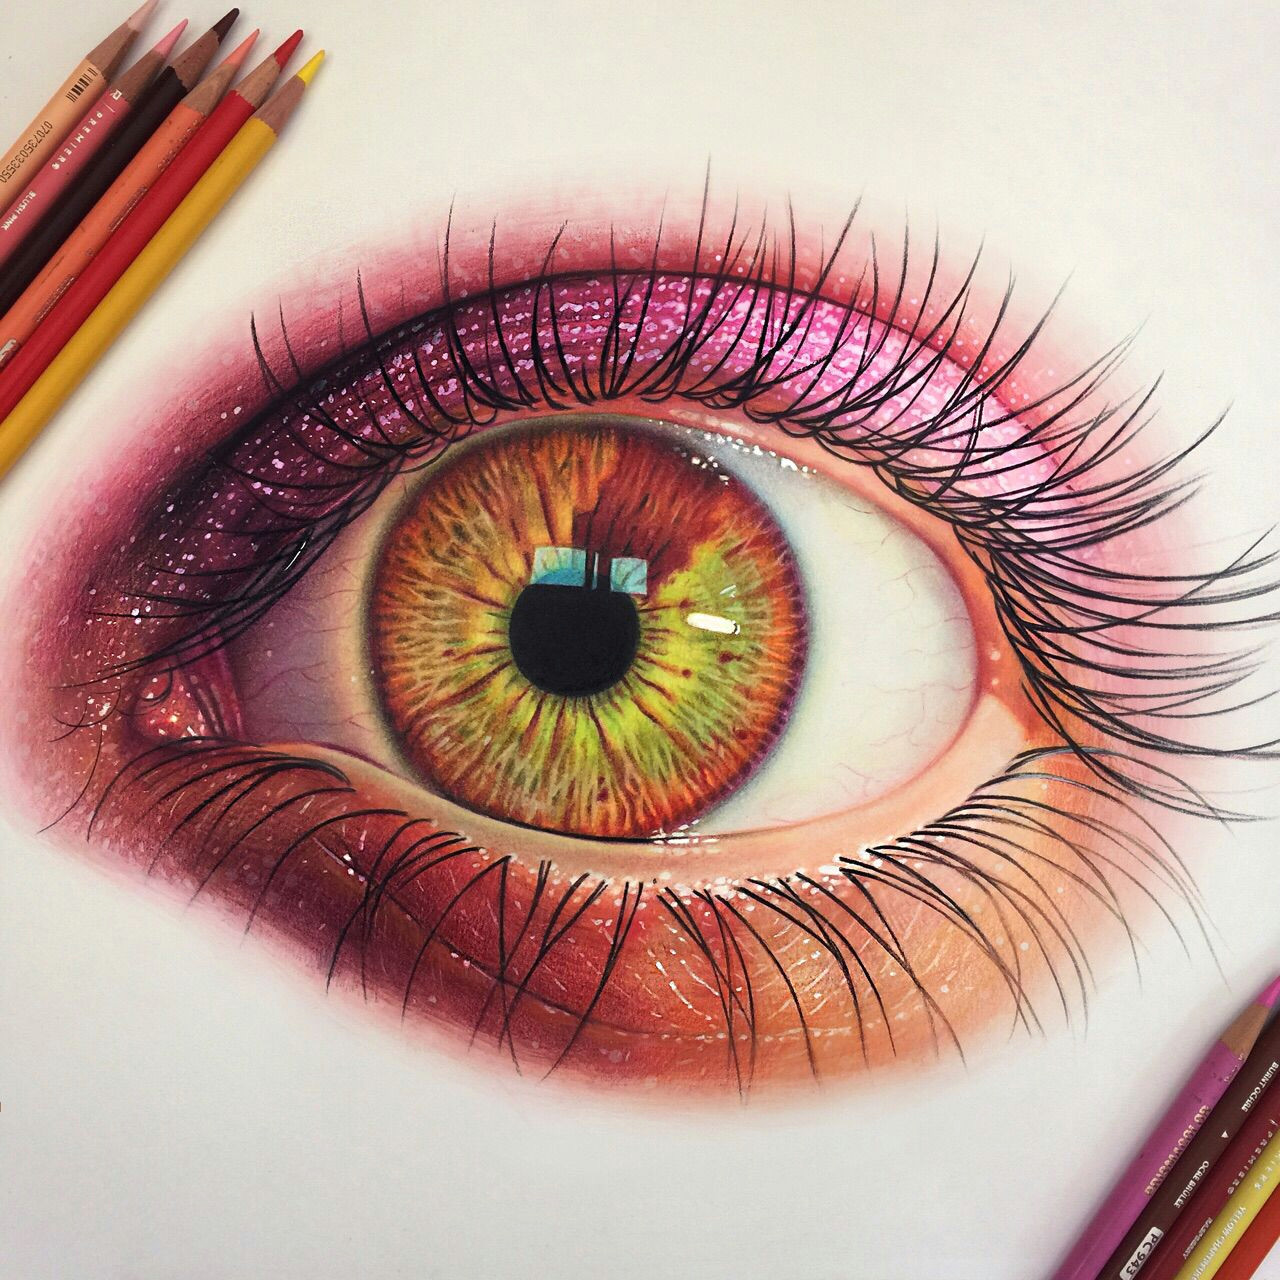 painting drawing watercolor painting realistic pencil drawings eye drawings